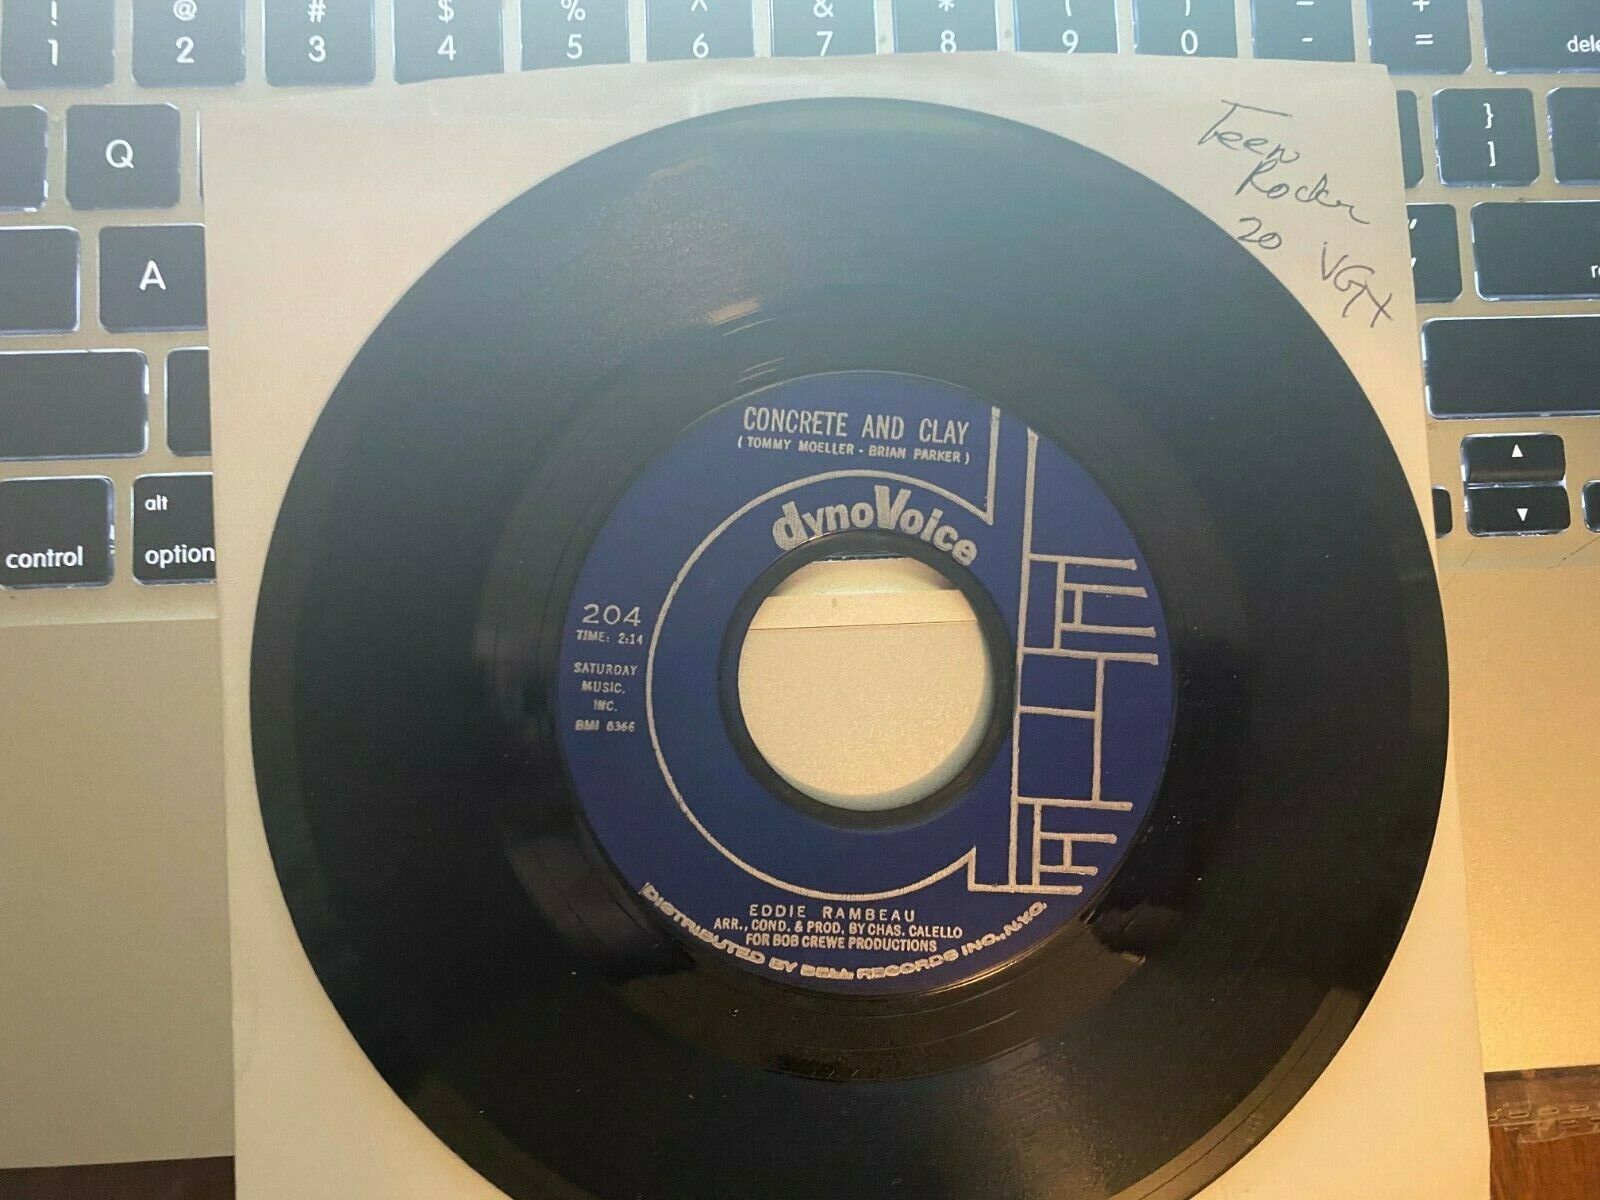 TEEN ROCKER 45 RPM RECORD -EDDIE RAMBEAU - DYNOVOICE 204